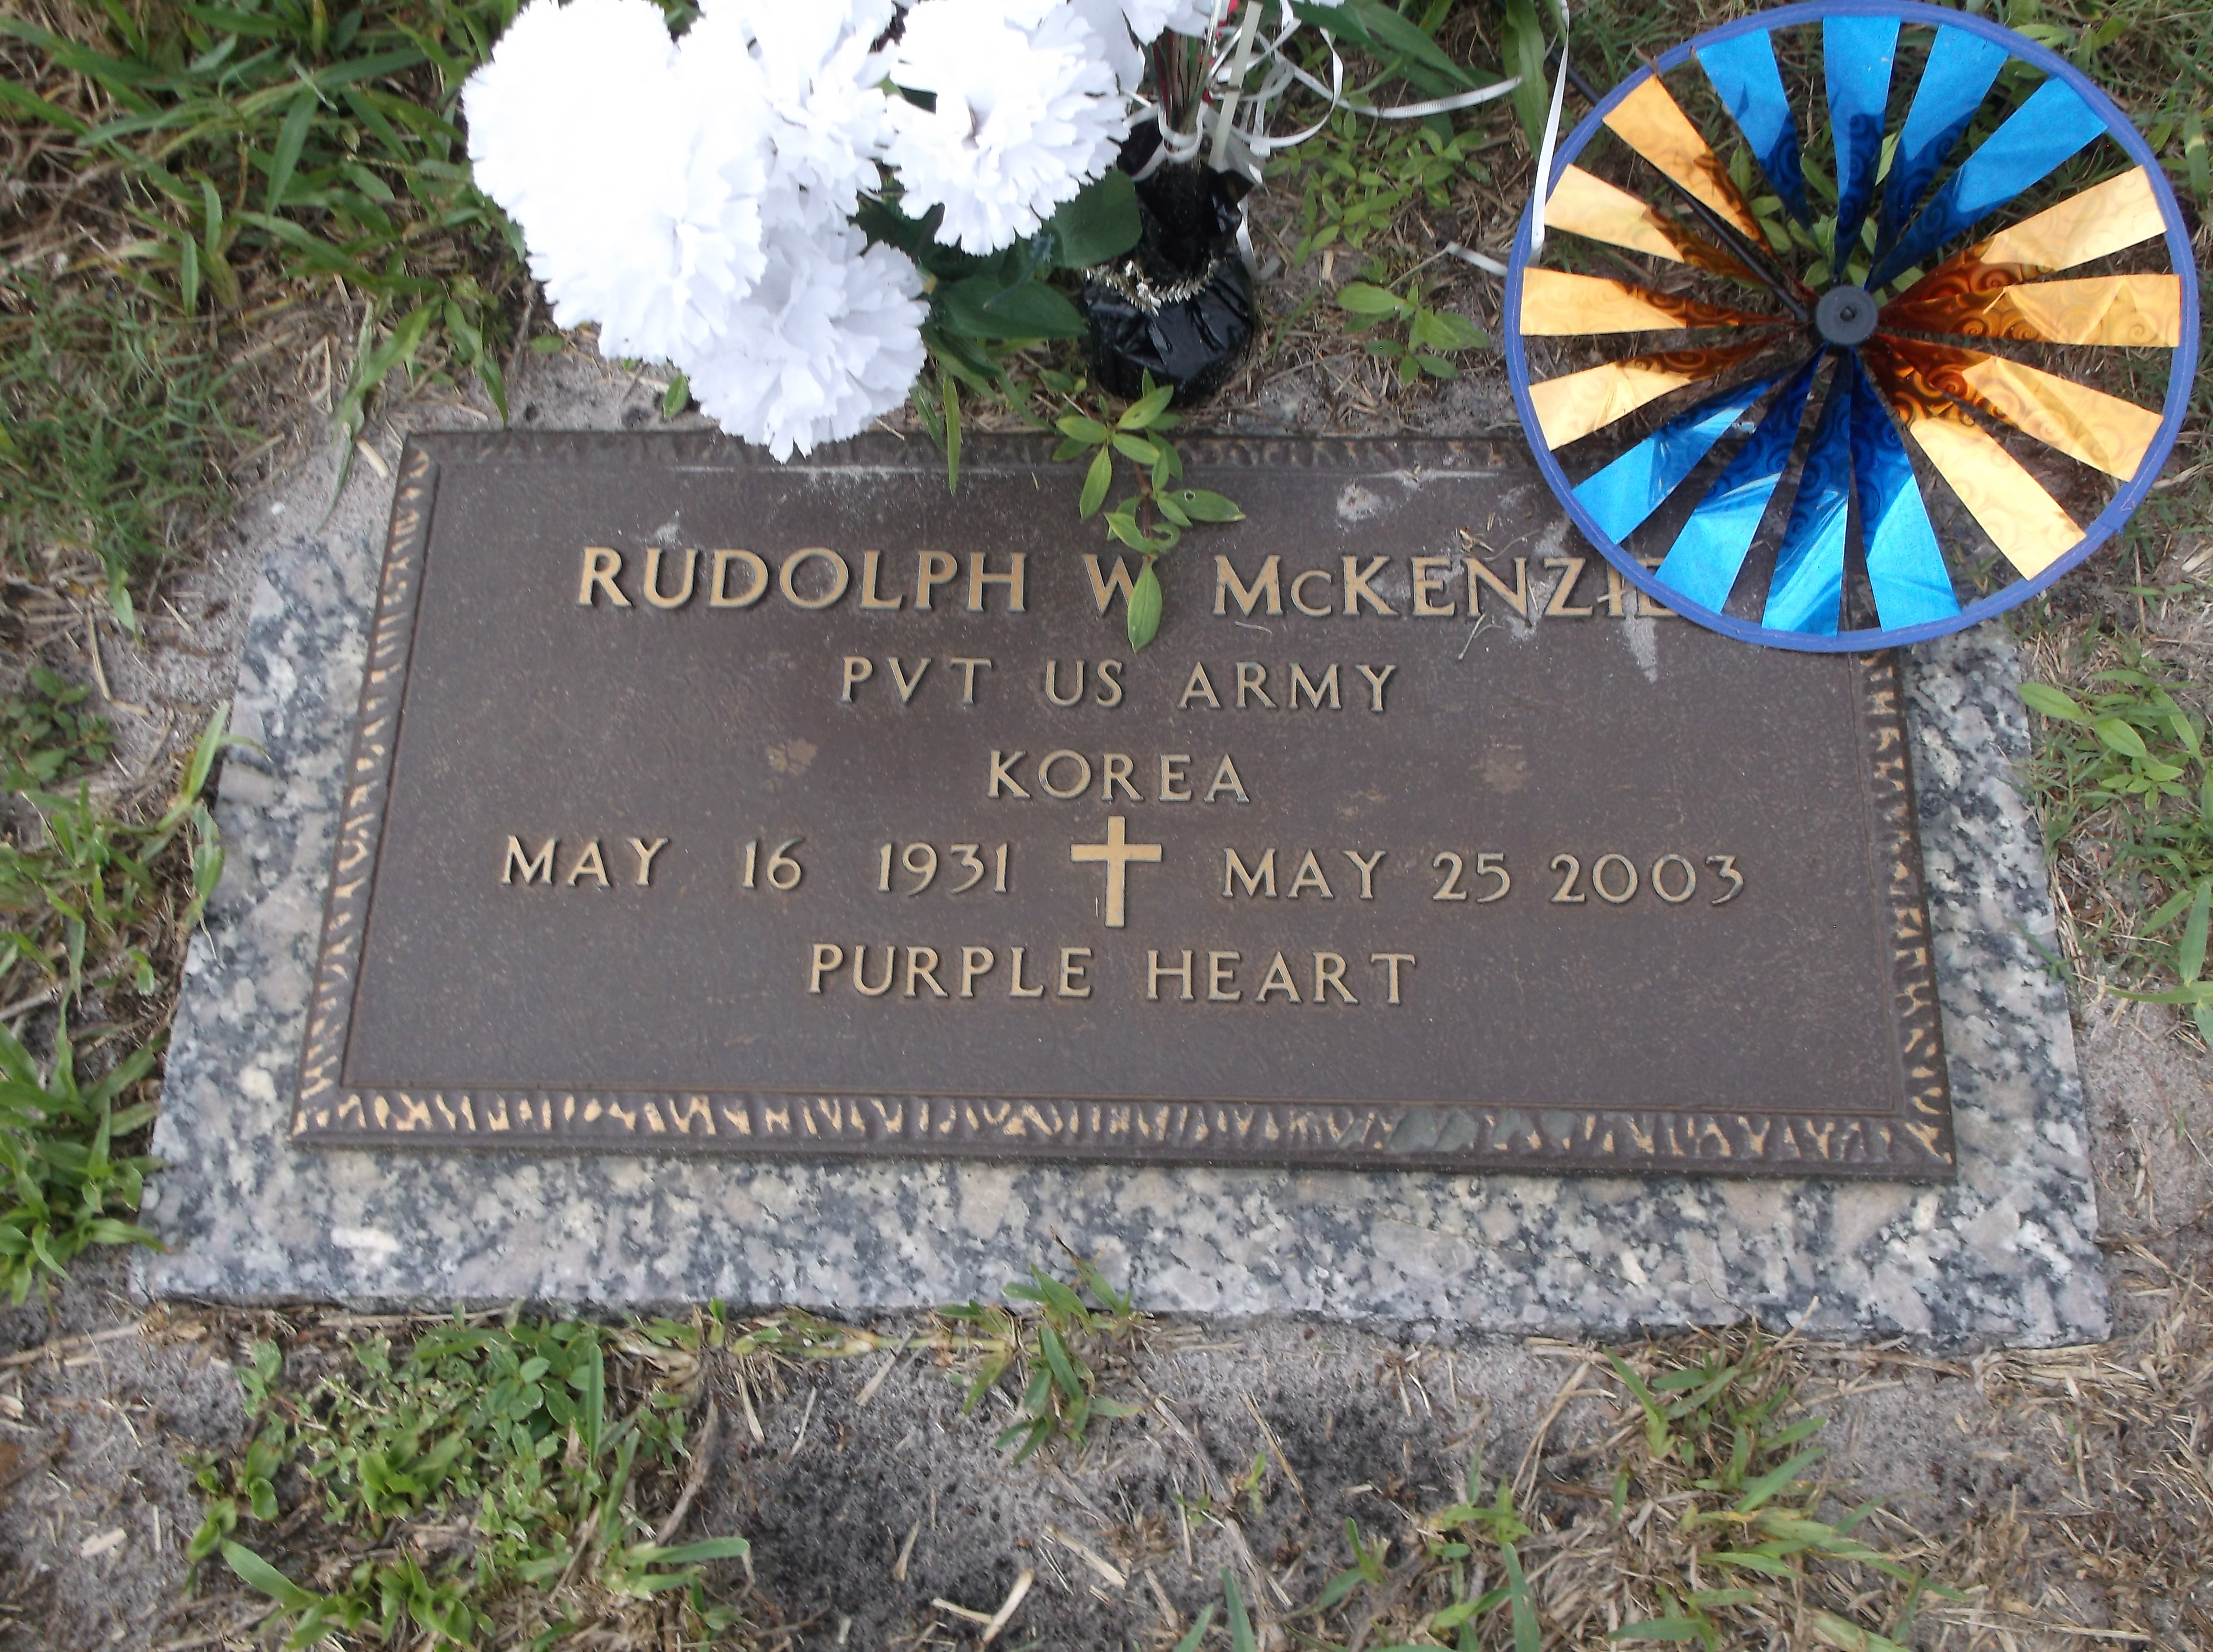 Rudolph W McKenzie